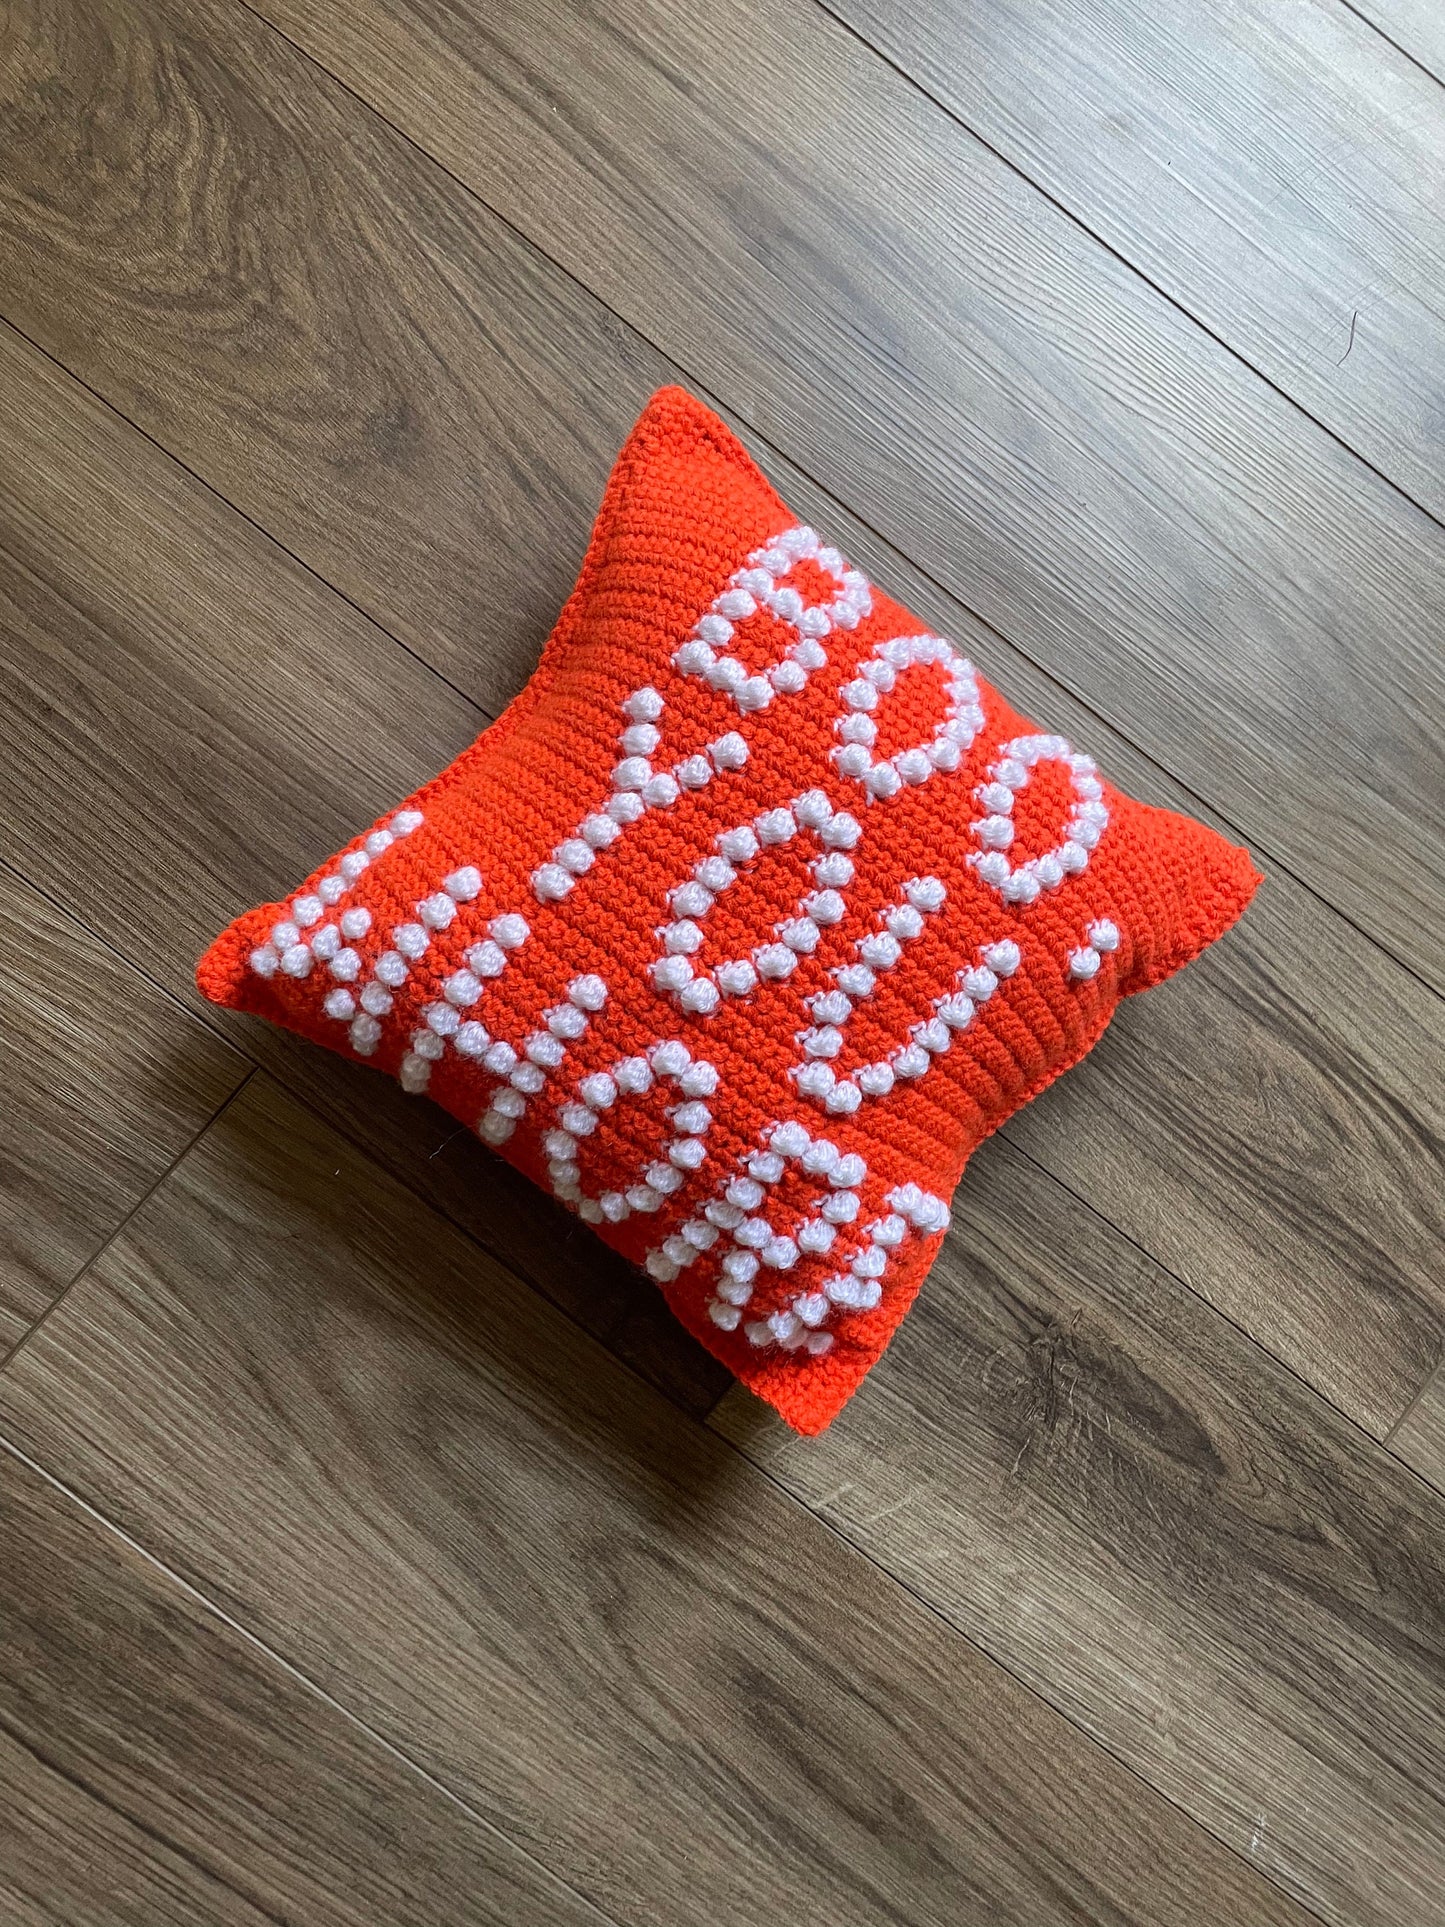 CROCHET PATTERN- Boo, You Whore Crochet Pillow Pattern, Mean Girls Crochet Pillow Pattern